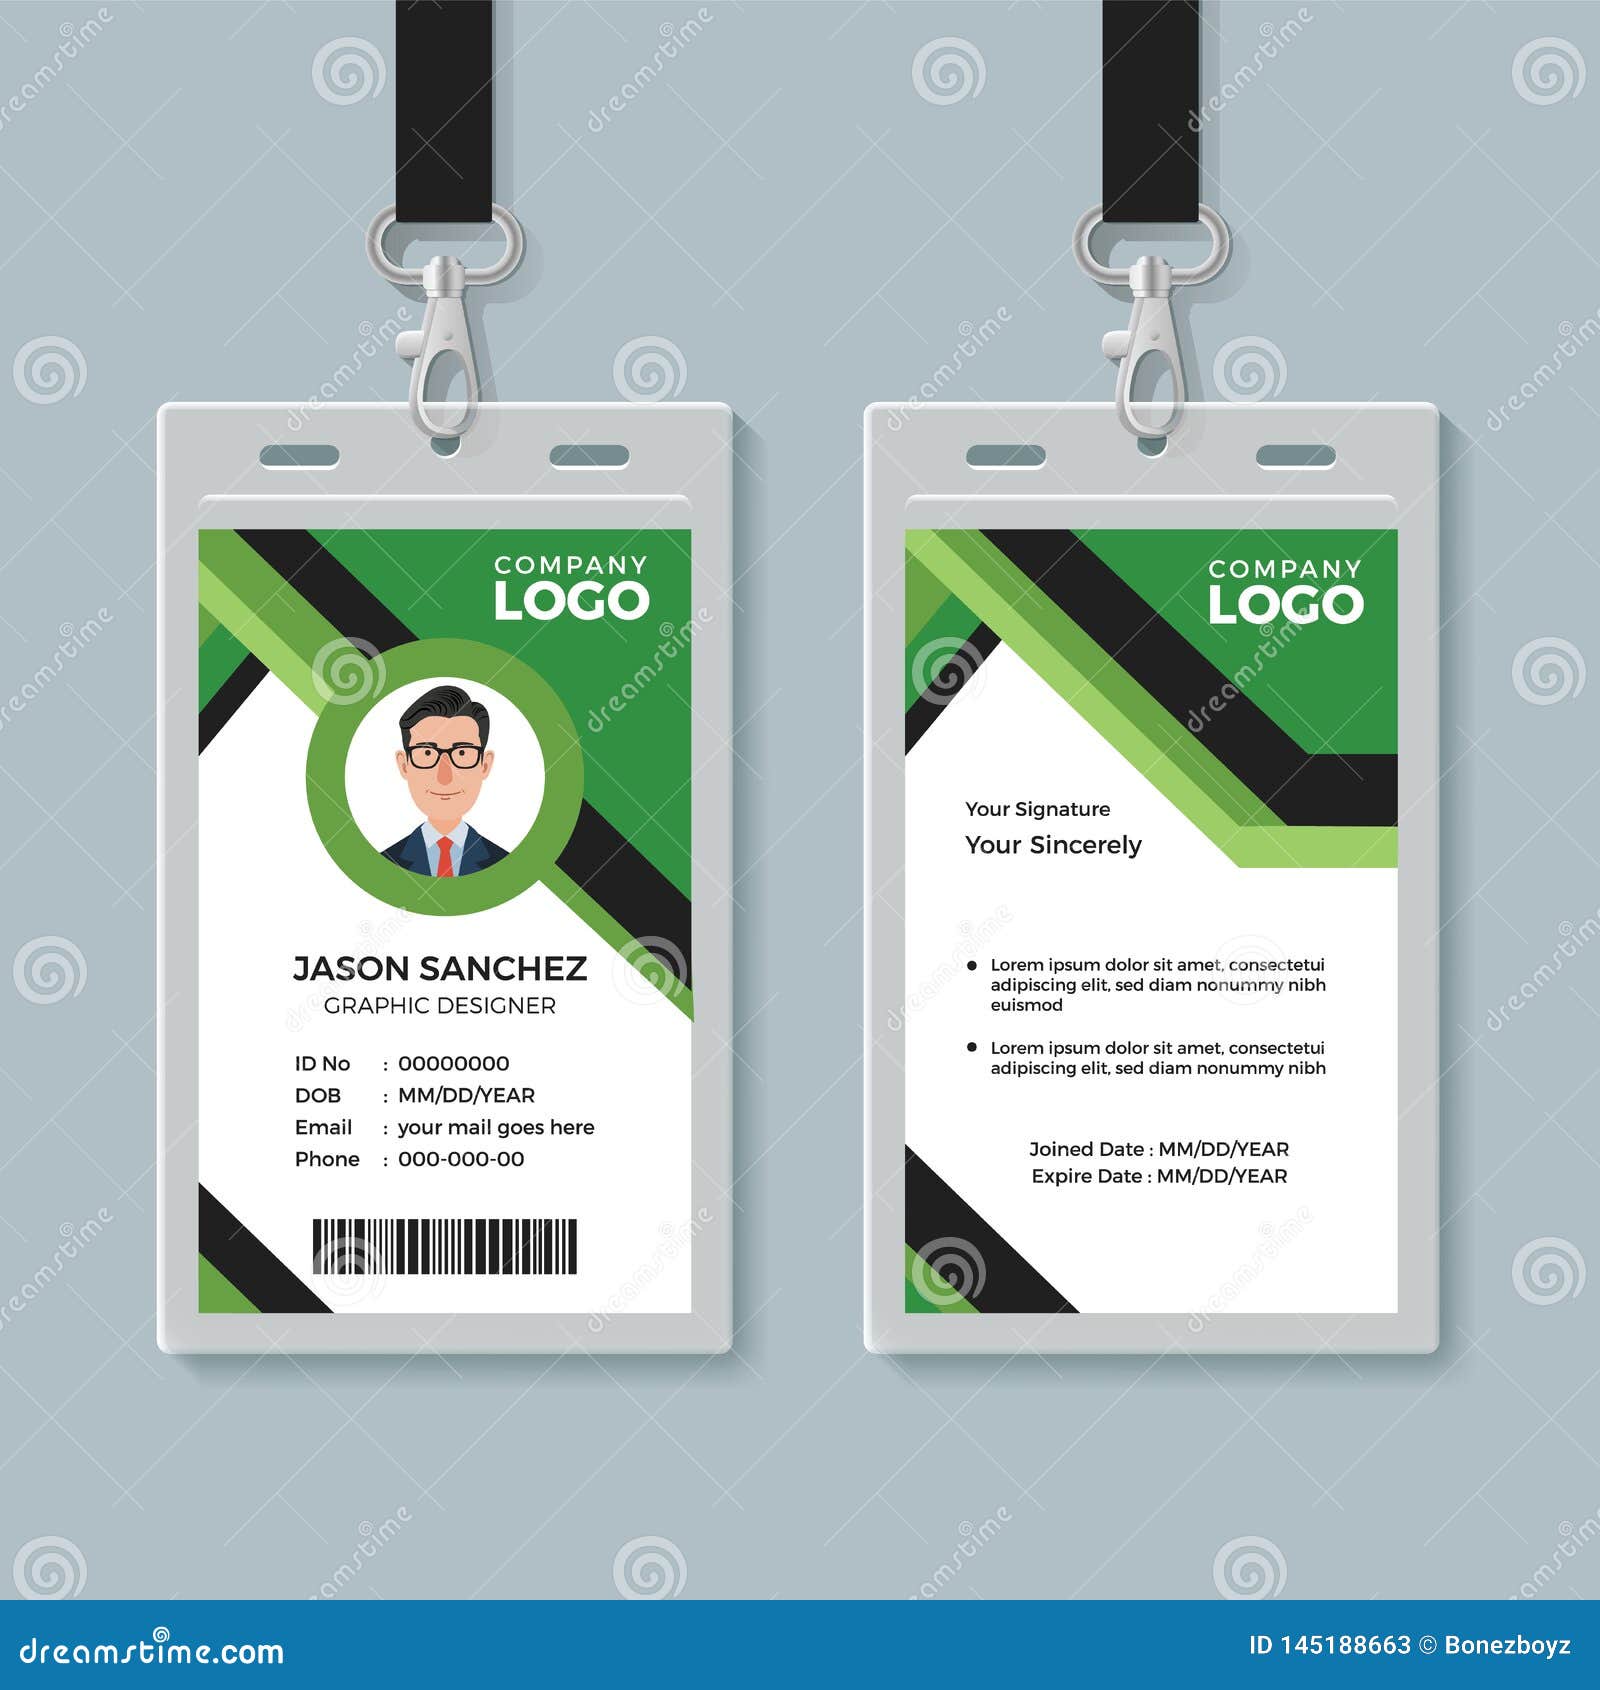 Simple Corporate Office Identity Card Design Template Stock Vector Inside Sample Of Id Card Template